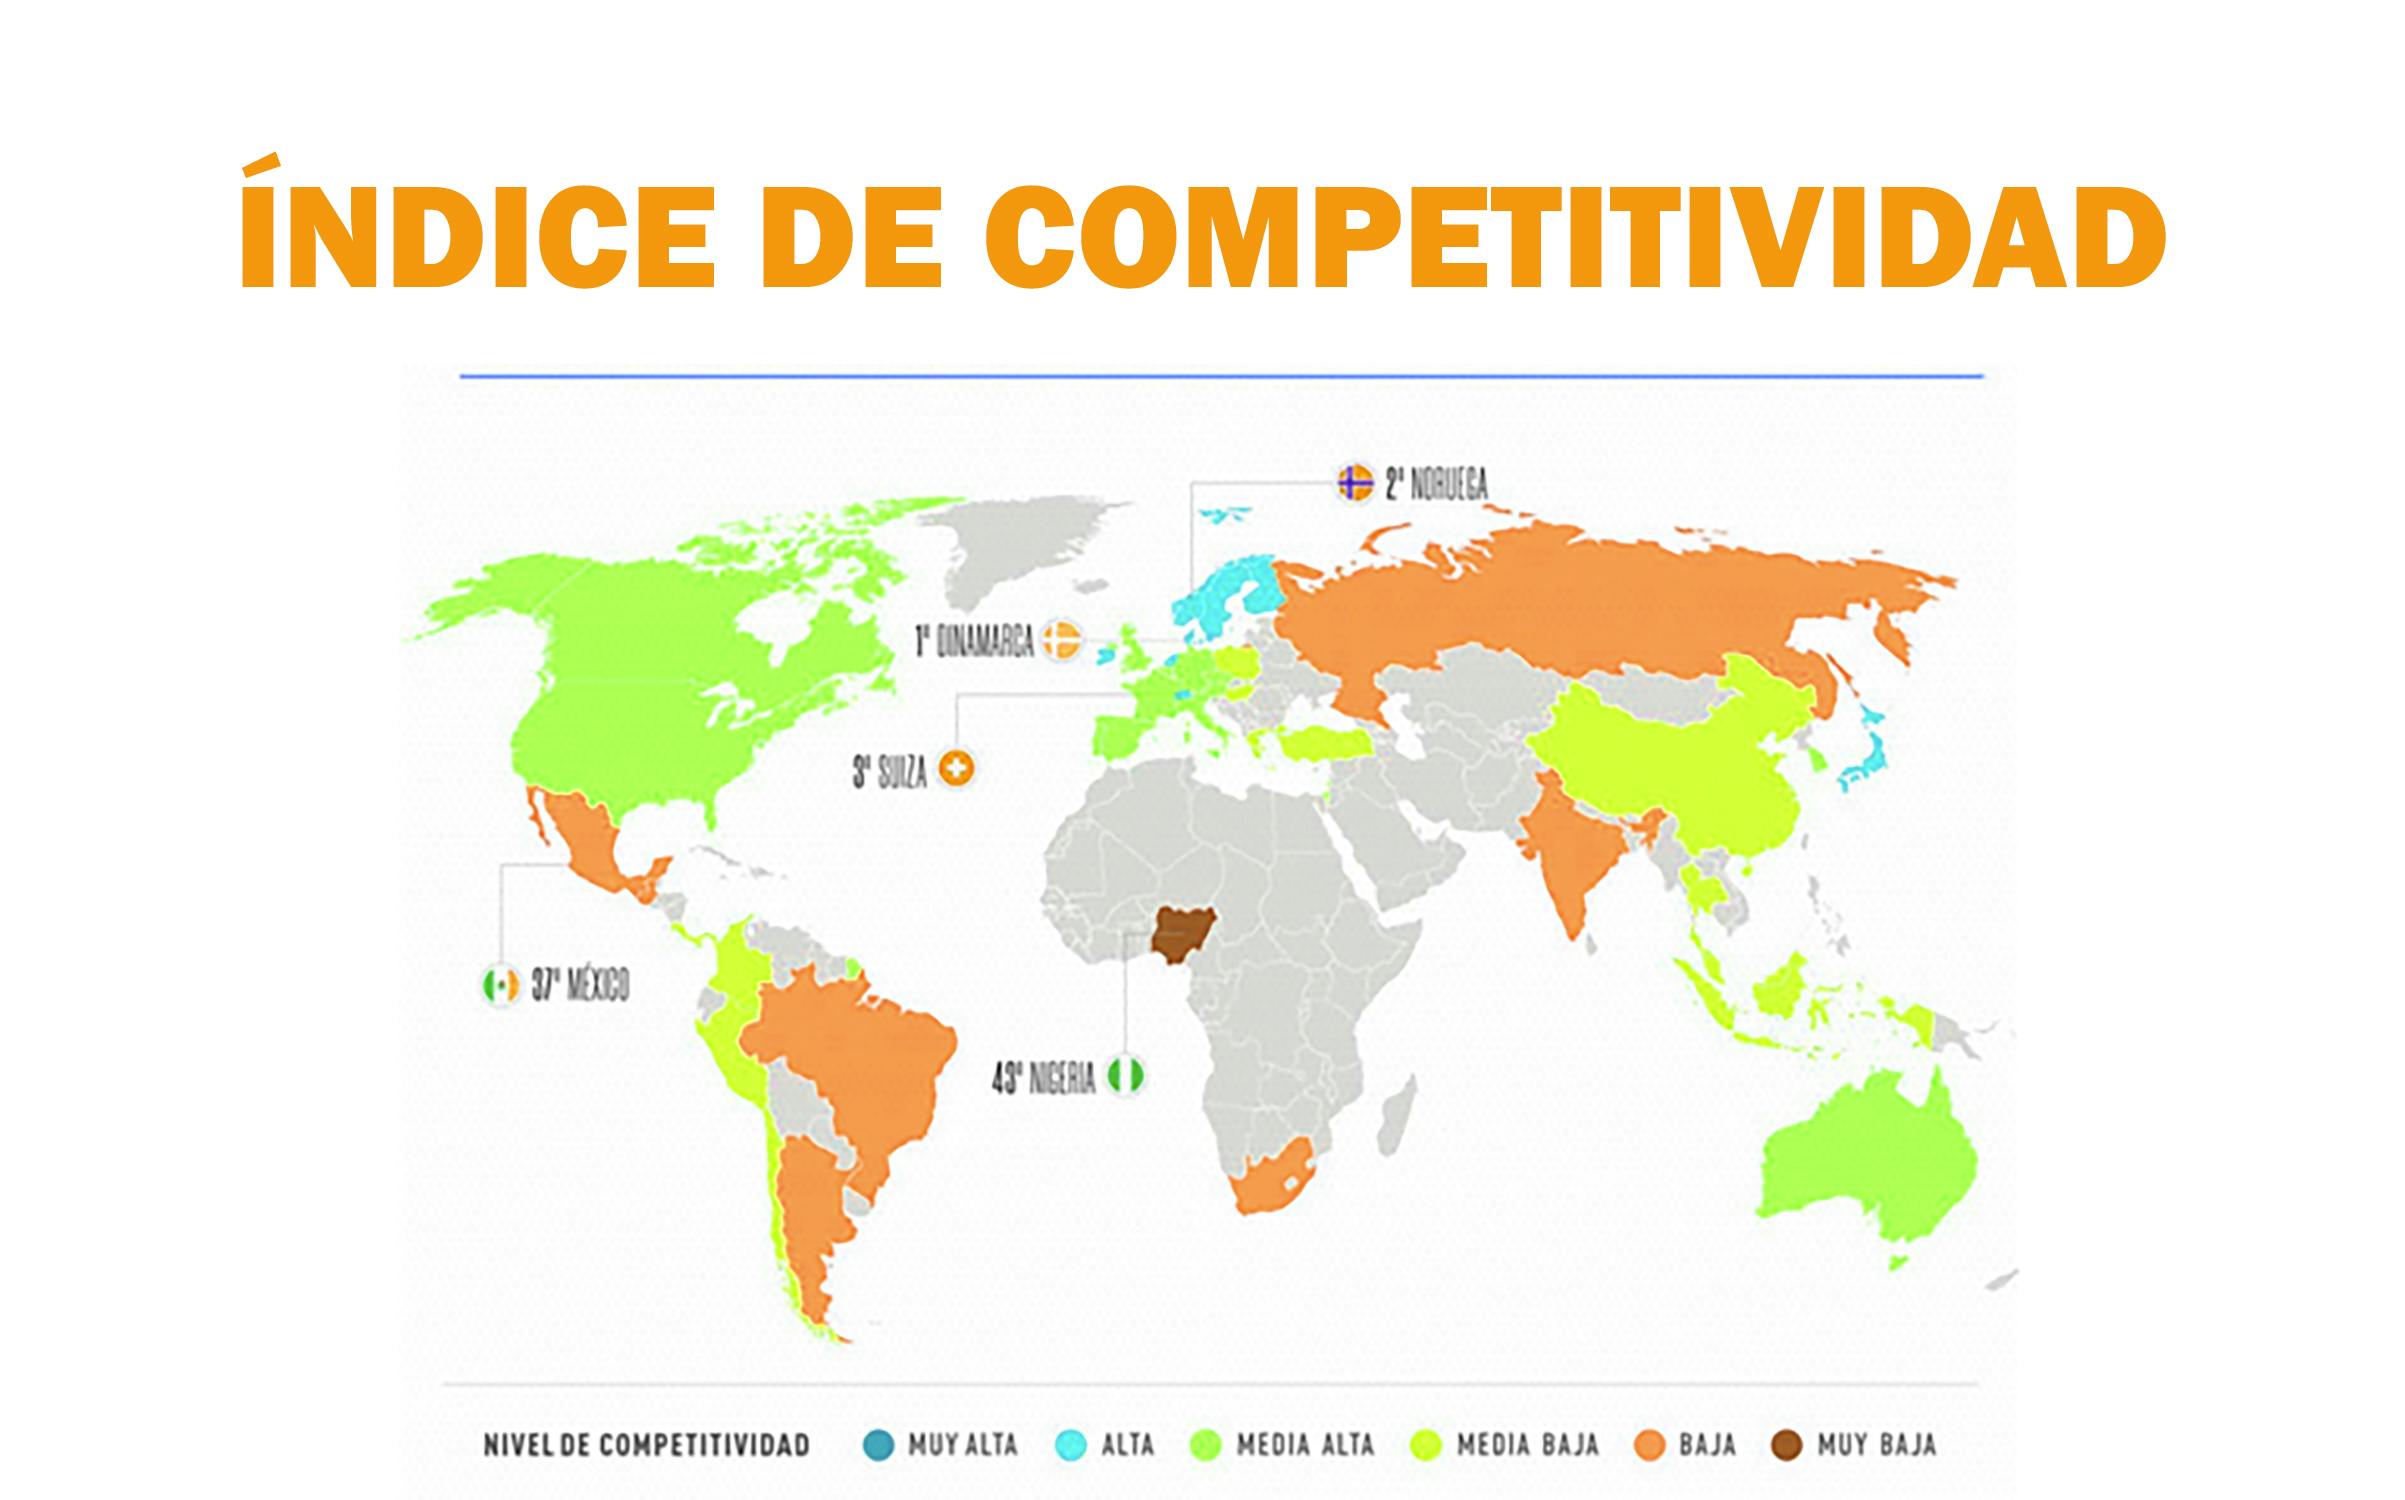 Posición 37 en competitividad internacinal para México